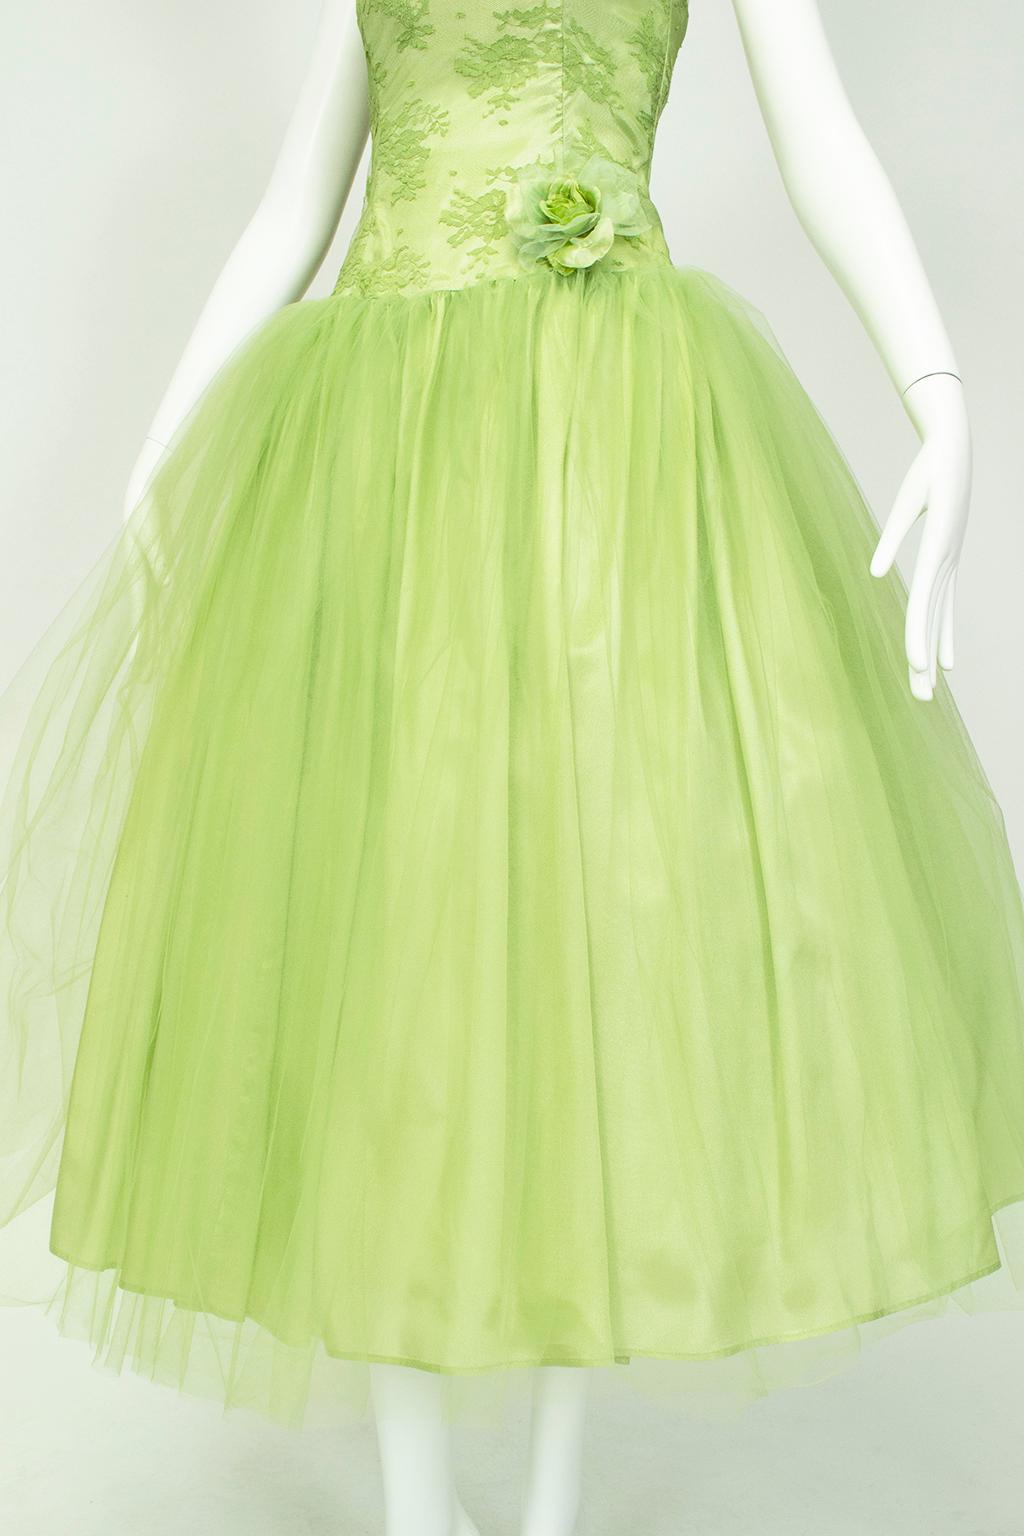 Women's Jessica McClintock for Gunne Sax Strapless Lime Ballerina Dress – Small, 2003 For Sale